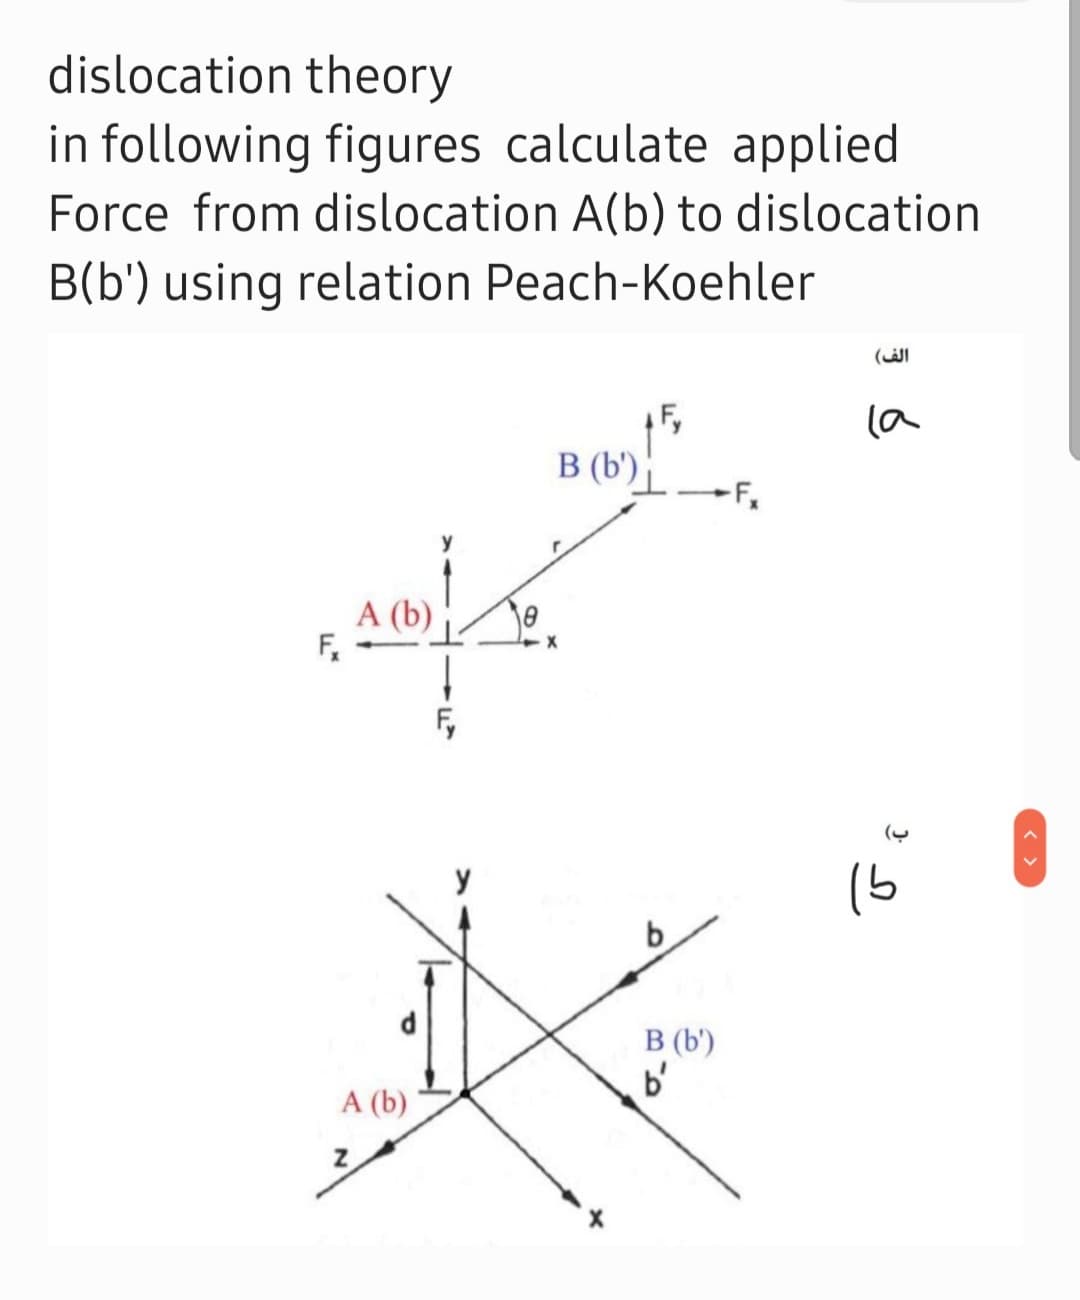 dislocation theory
in following figures calculate applied
Force from dislocation A(b) to dislocation
B(b') using relation Peach-Koehler
الف(
la
B (b') |
A (b)
F,
(5
B (b')
b'
A (b)
< >
